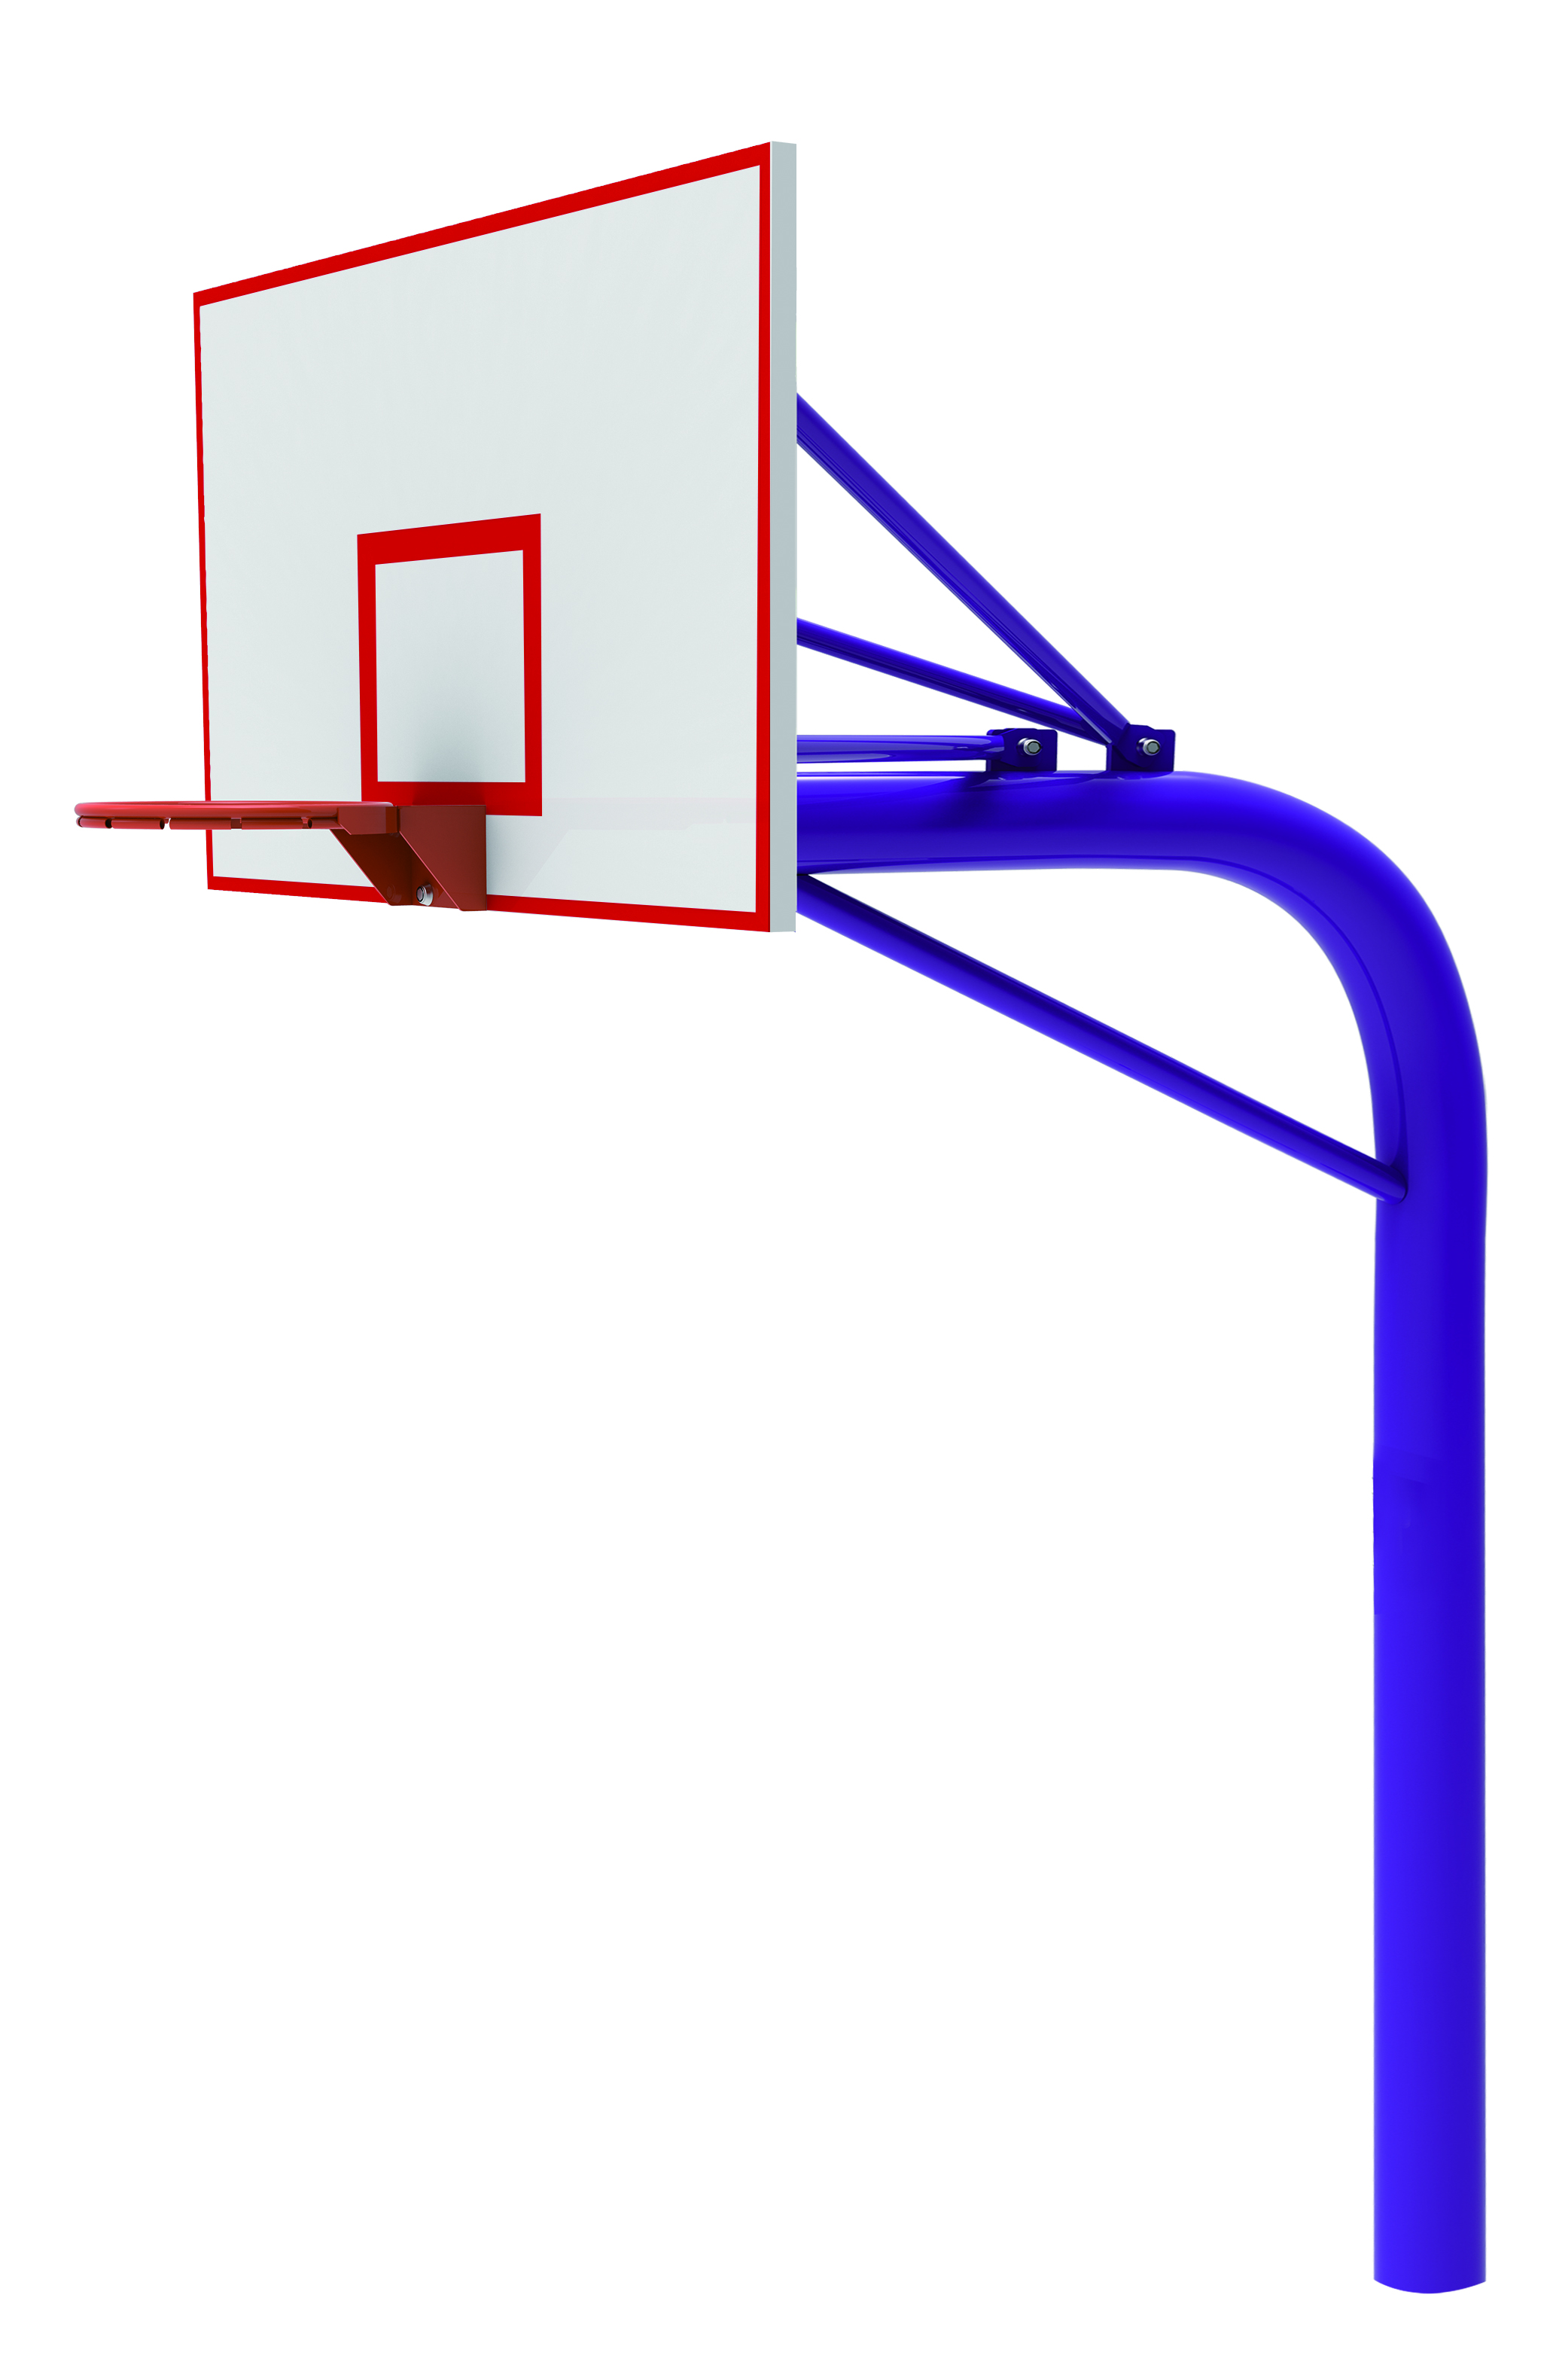 IRLQJG2 buried basketball hoop